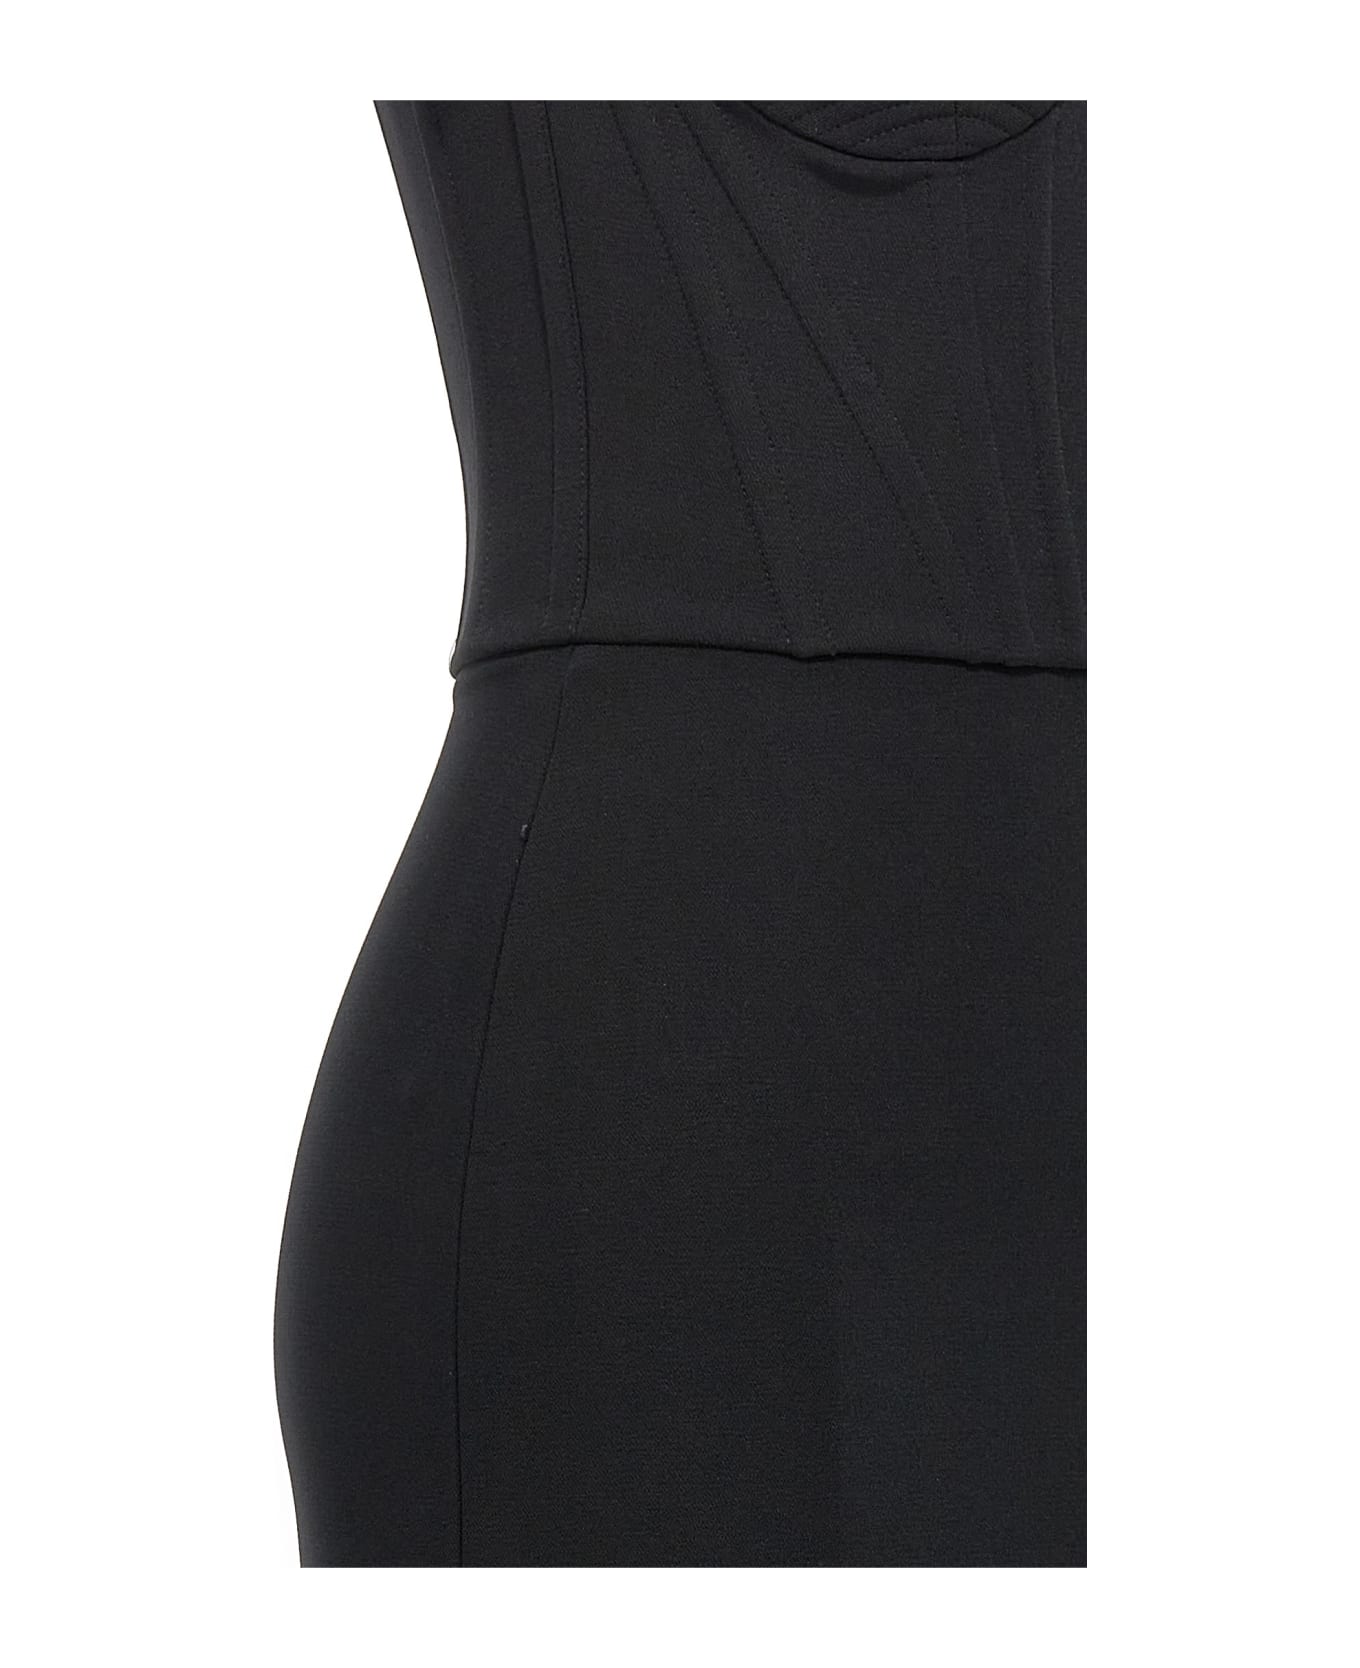 19:13 Dresscode Corset Dress - Black   ワンピース＆ドレス